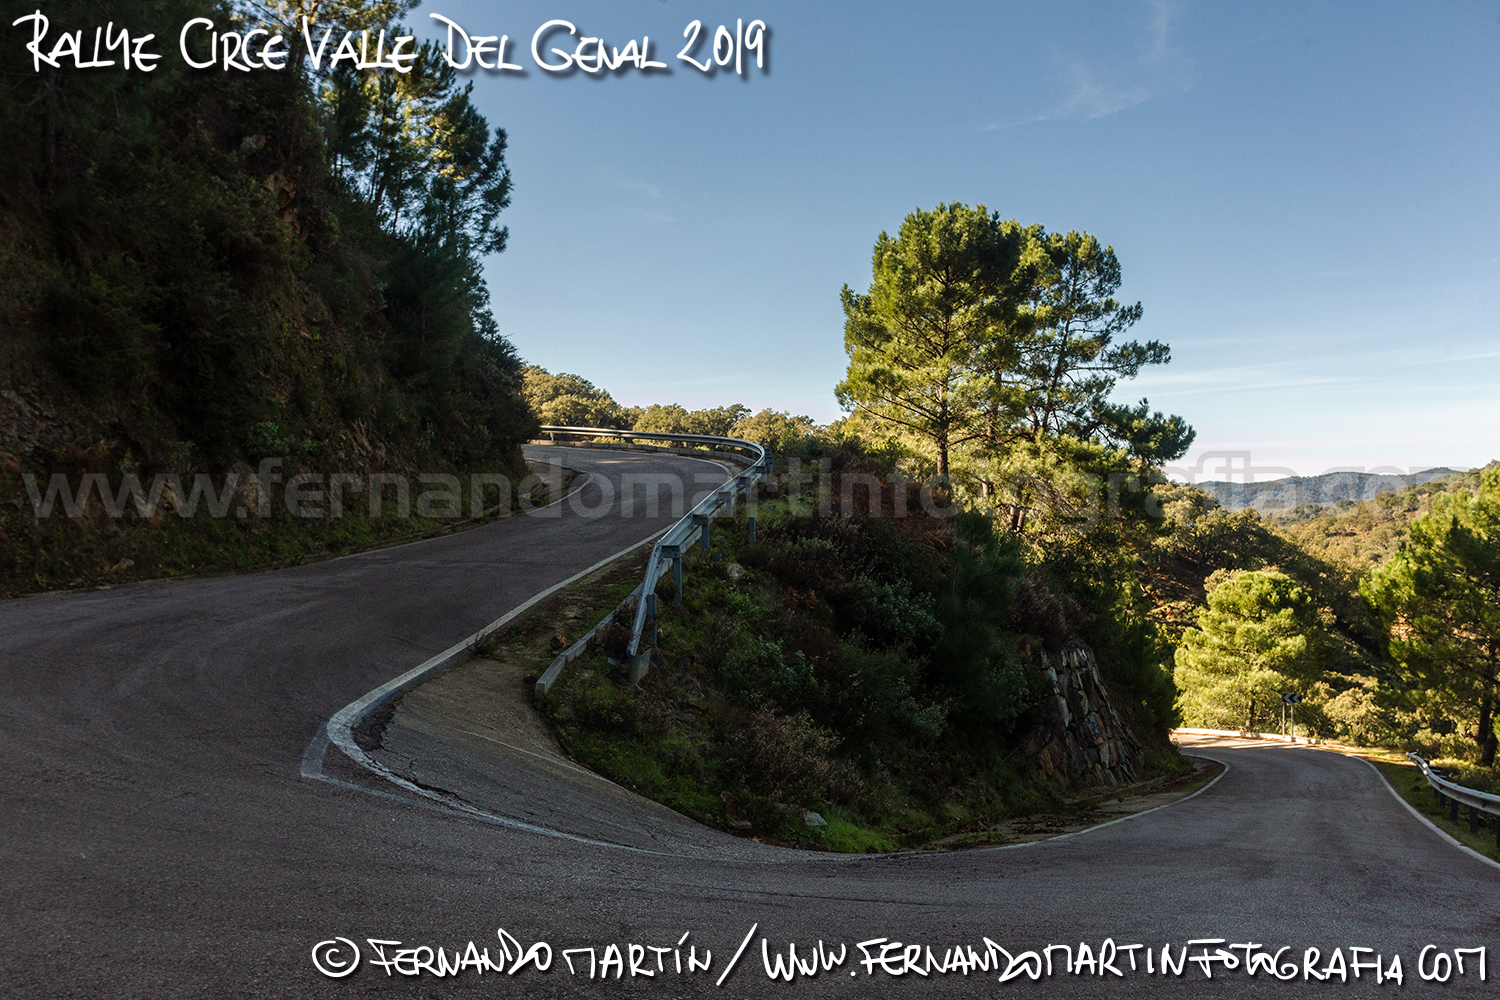 Rallye Valle del Genal 2019